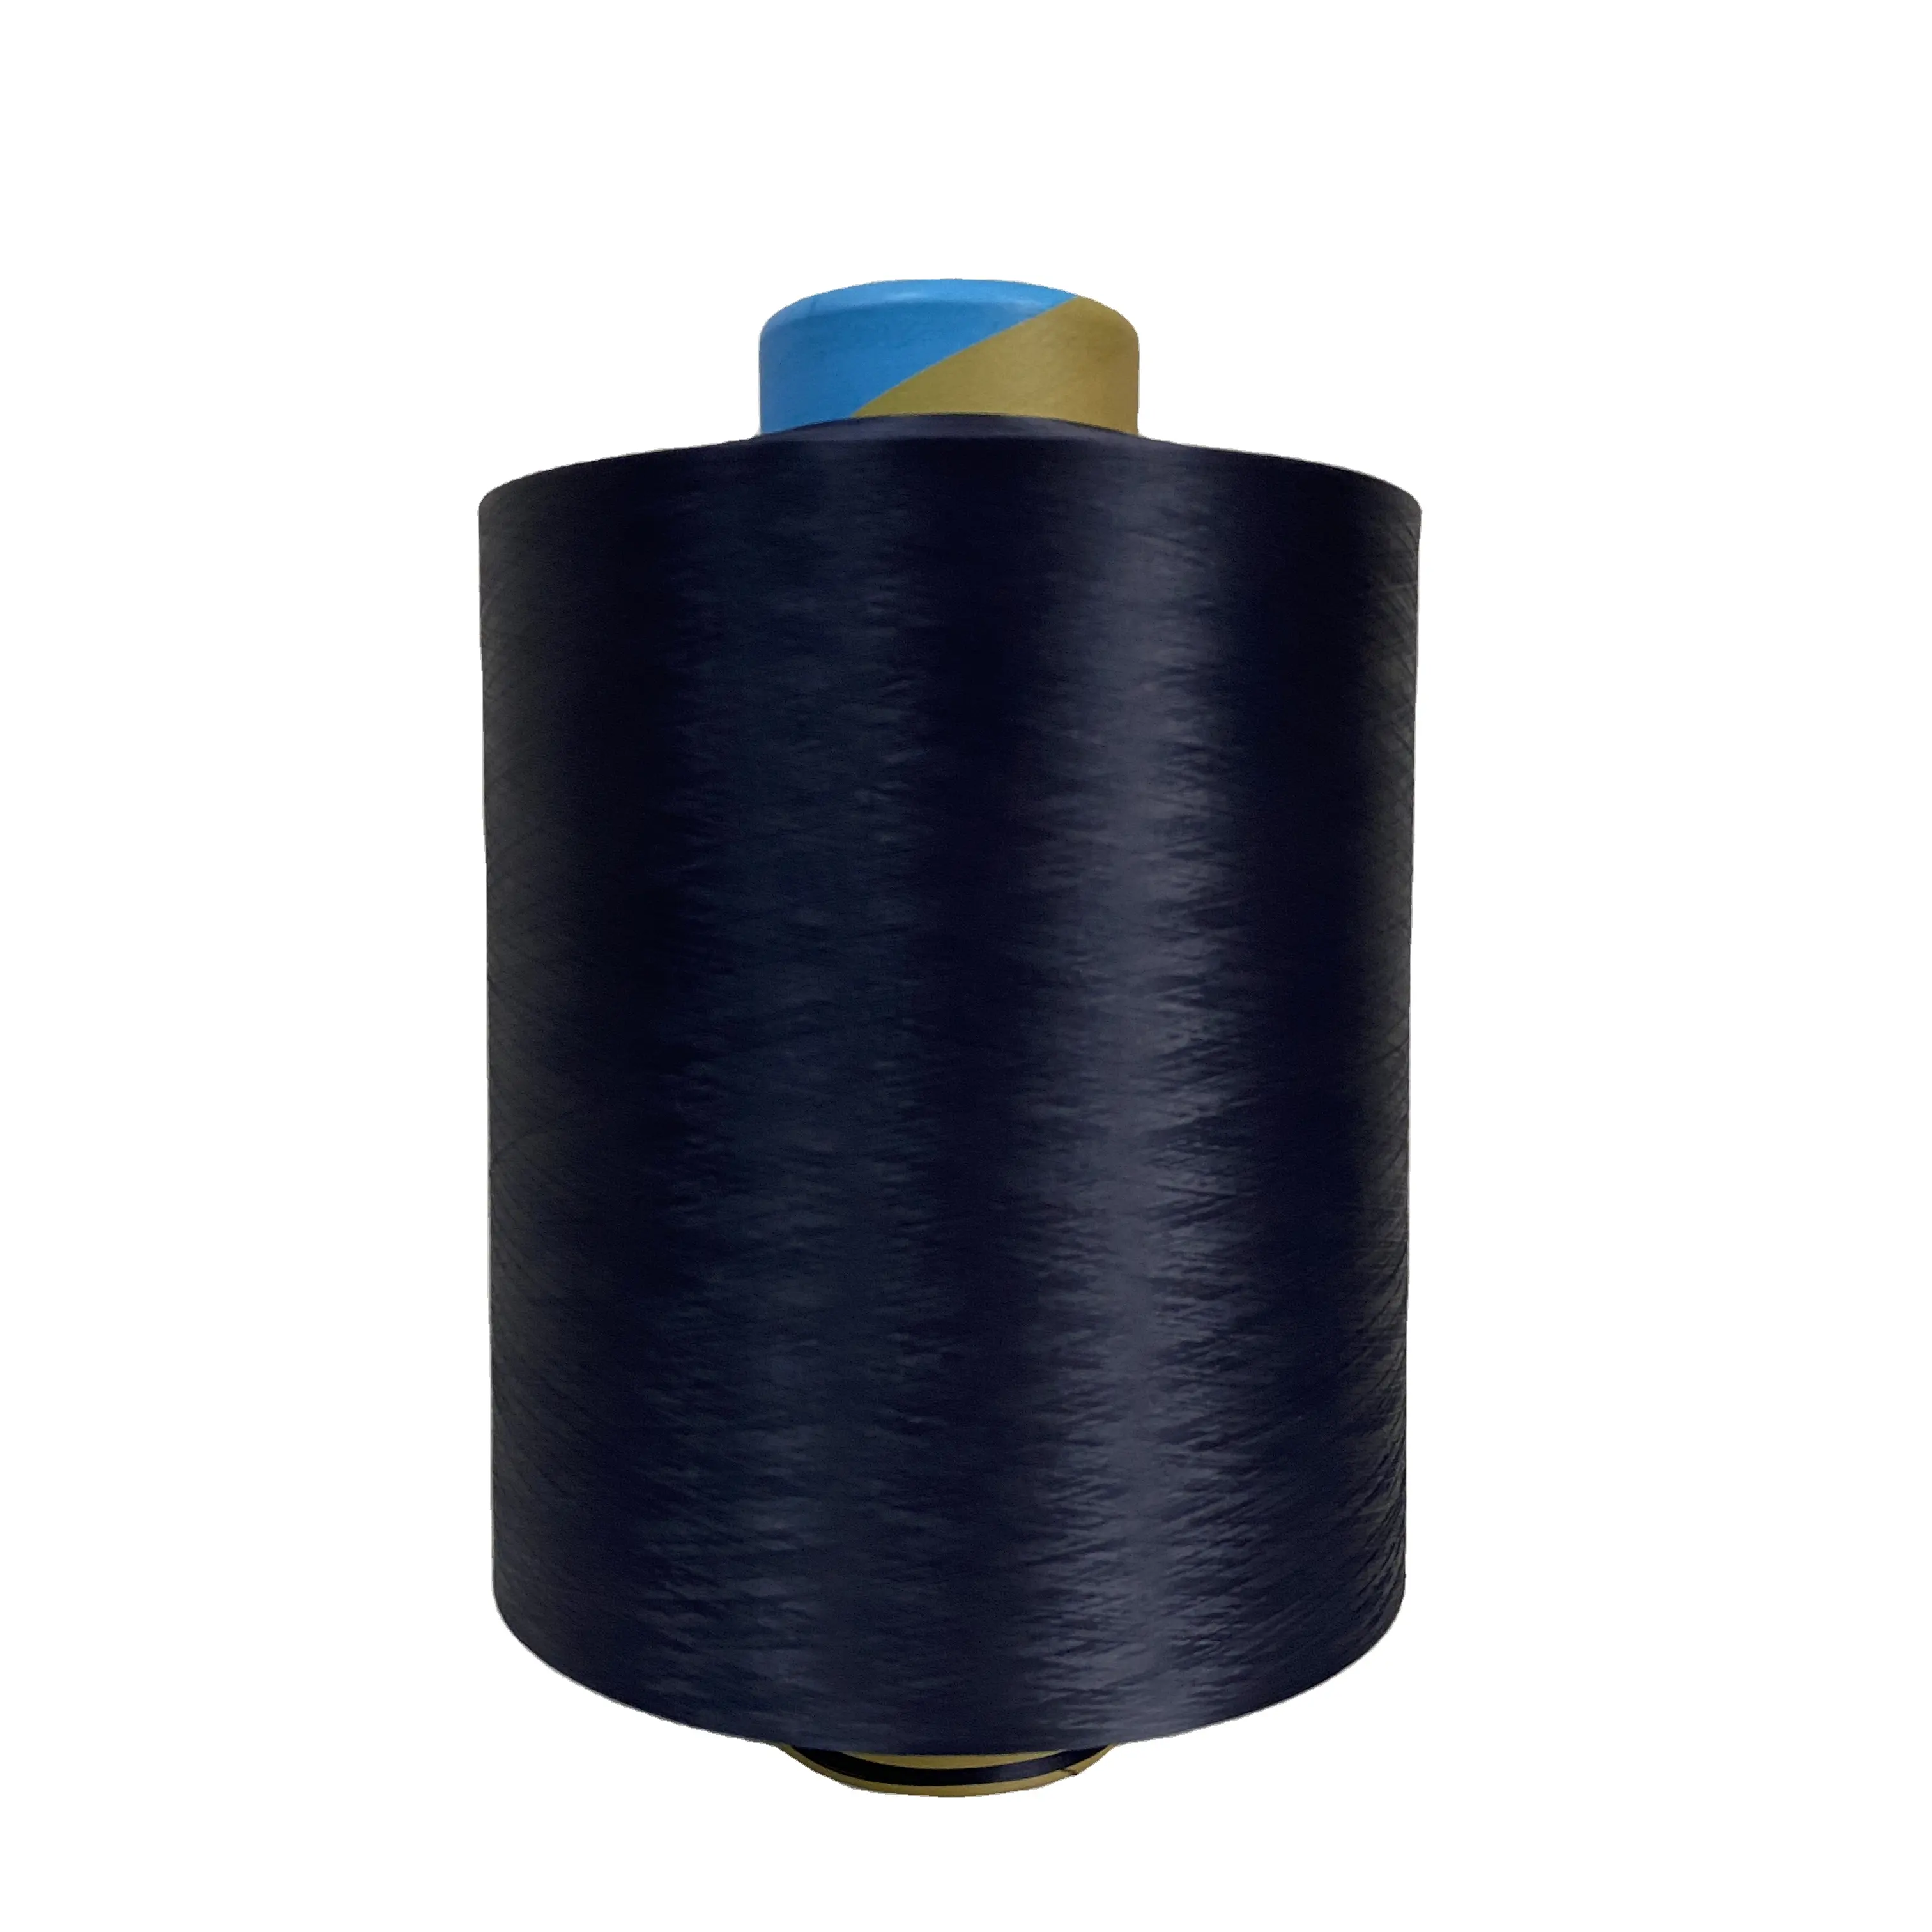 40D/24Fナイロン織り目加工糸安い糸価格靴下糸ナイロン糸縫製用44242BHG NIM